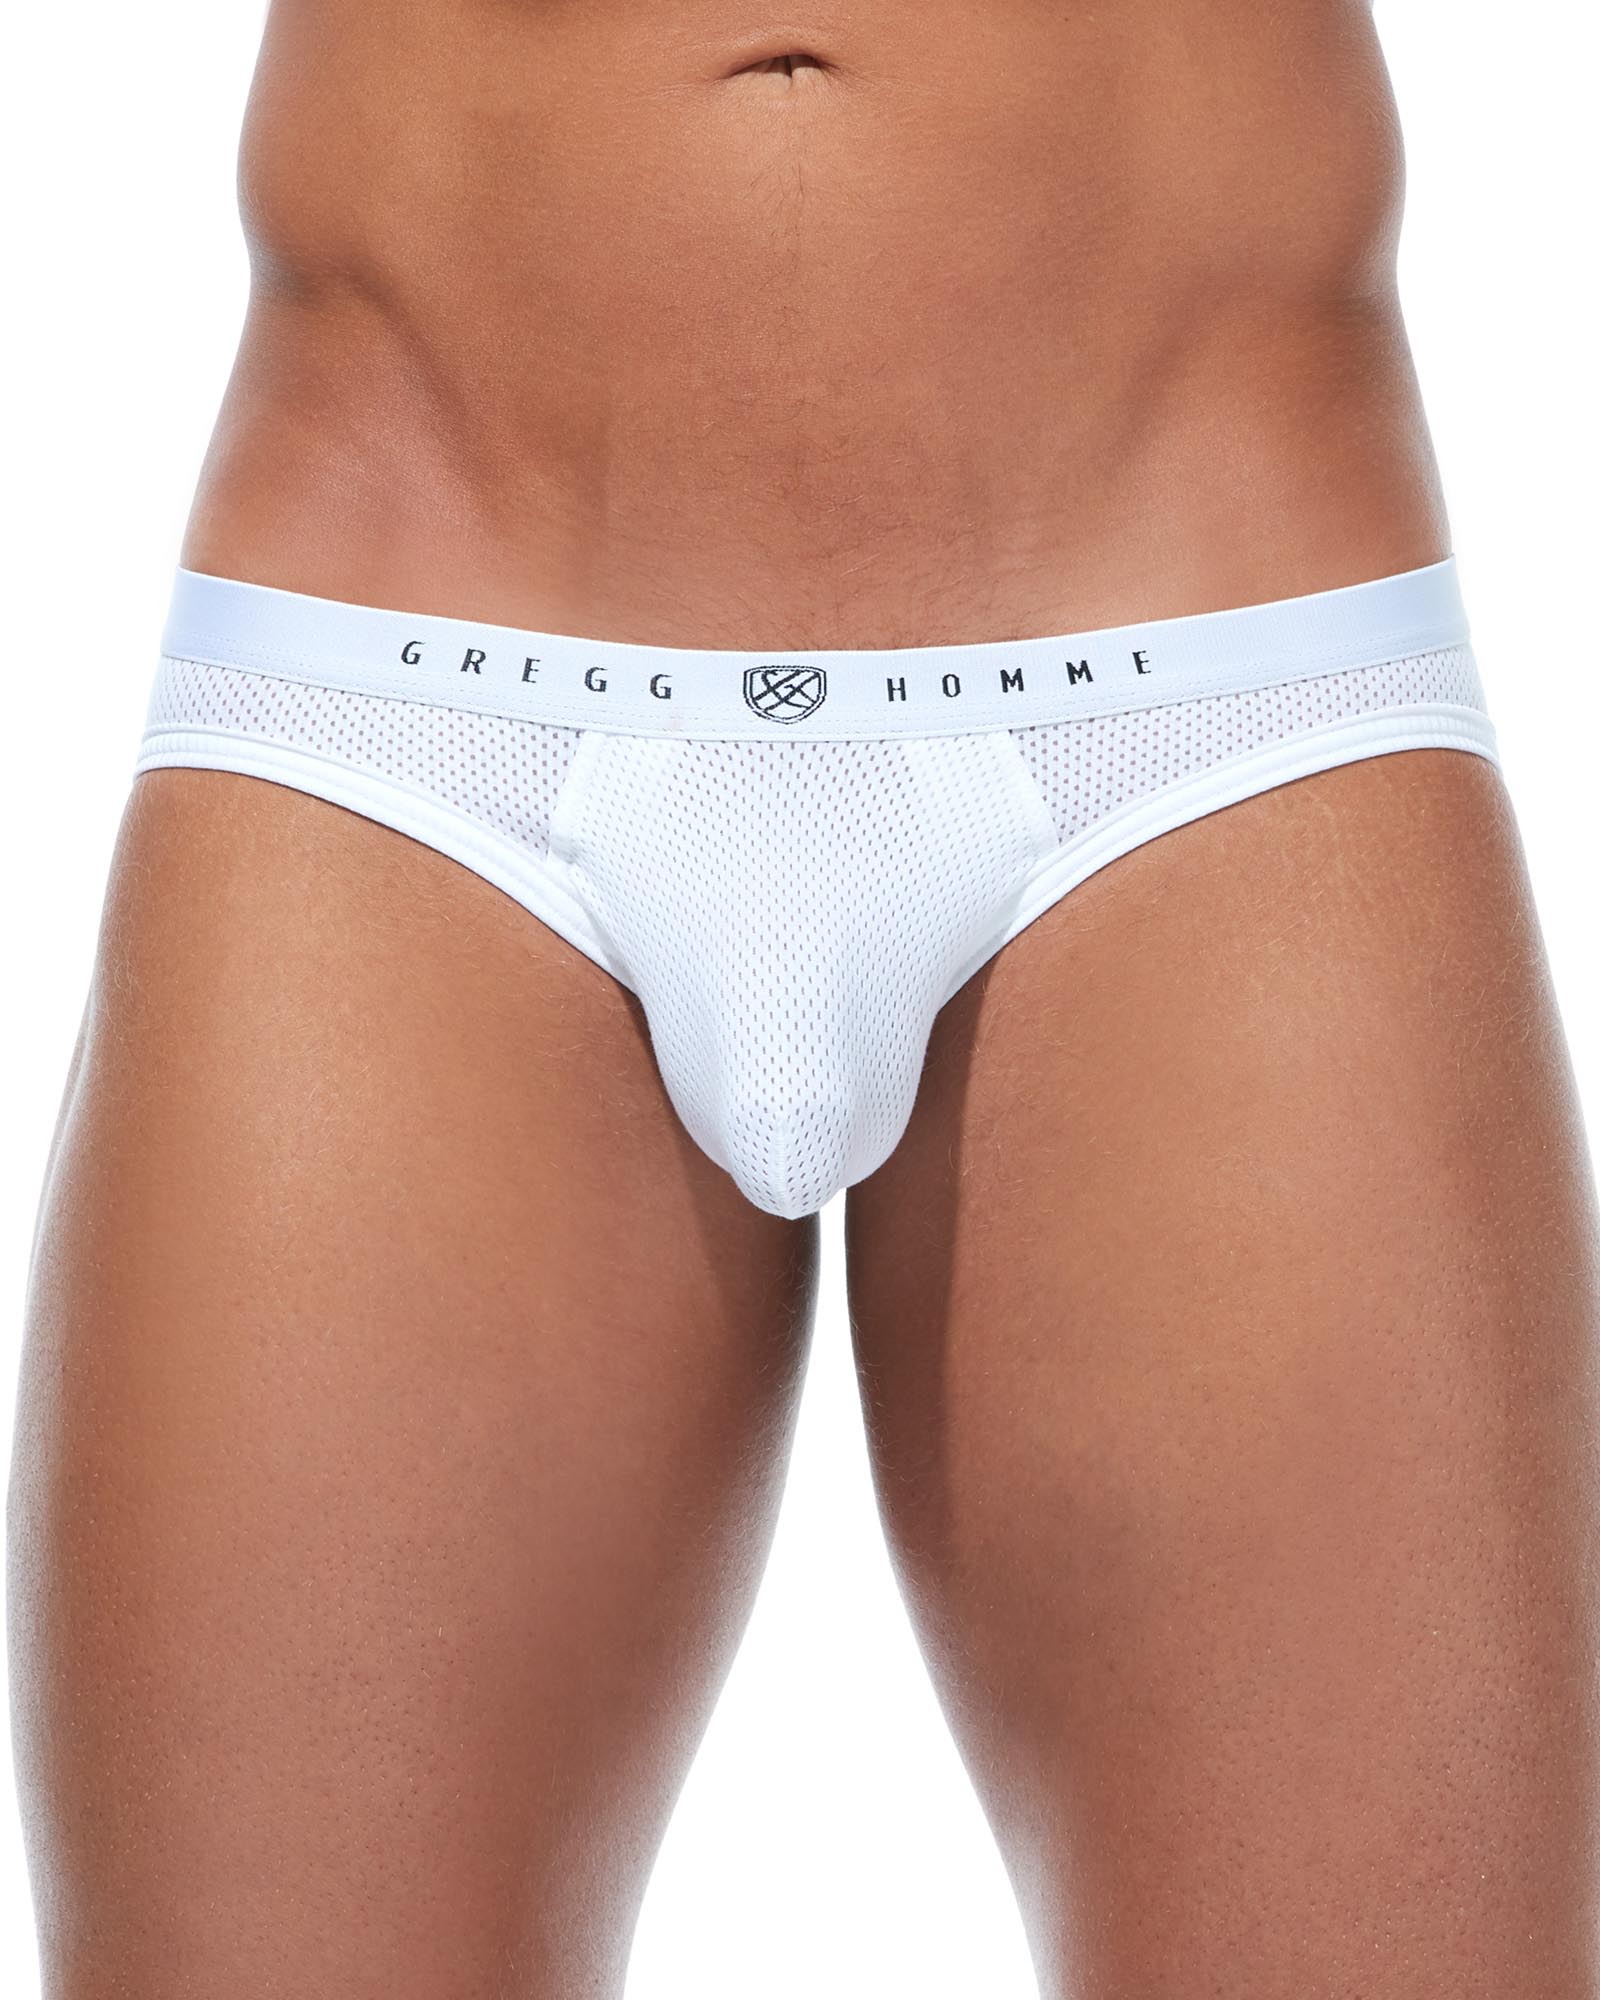 Gregg Homme Boxer Room Max MicroFiber Ultra Thin Underwear White 152705 44